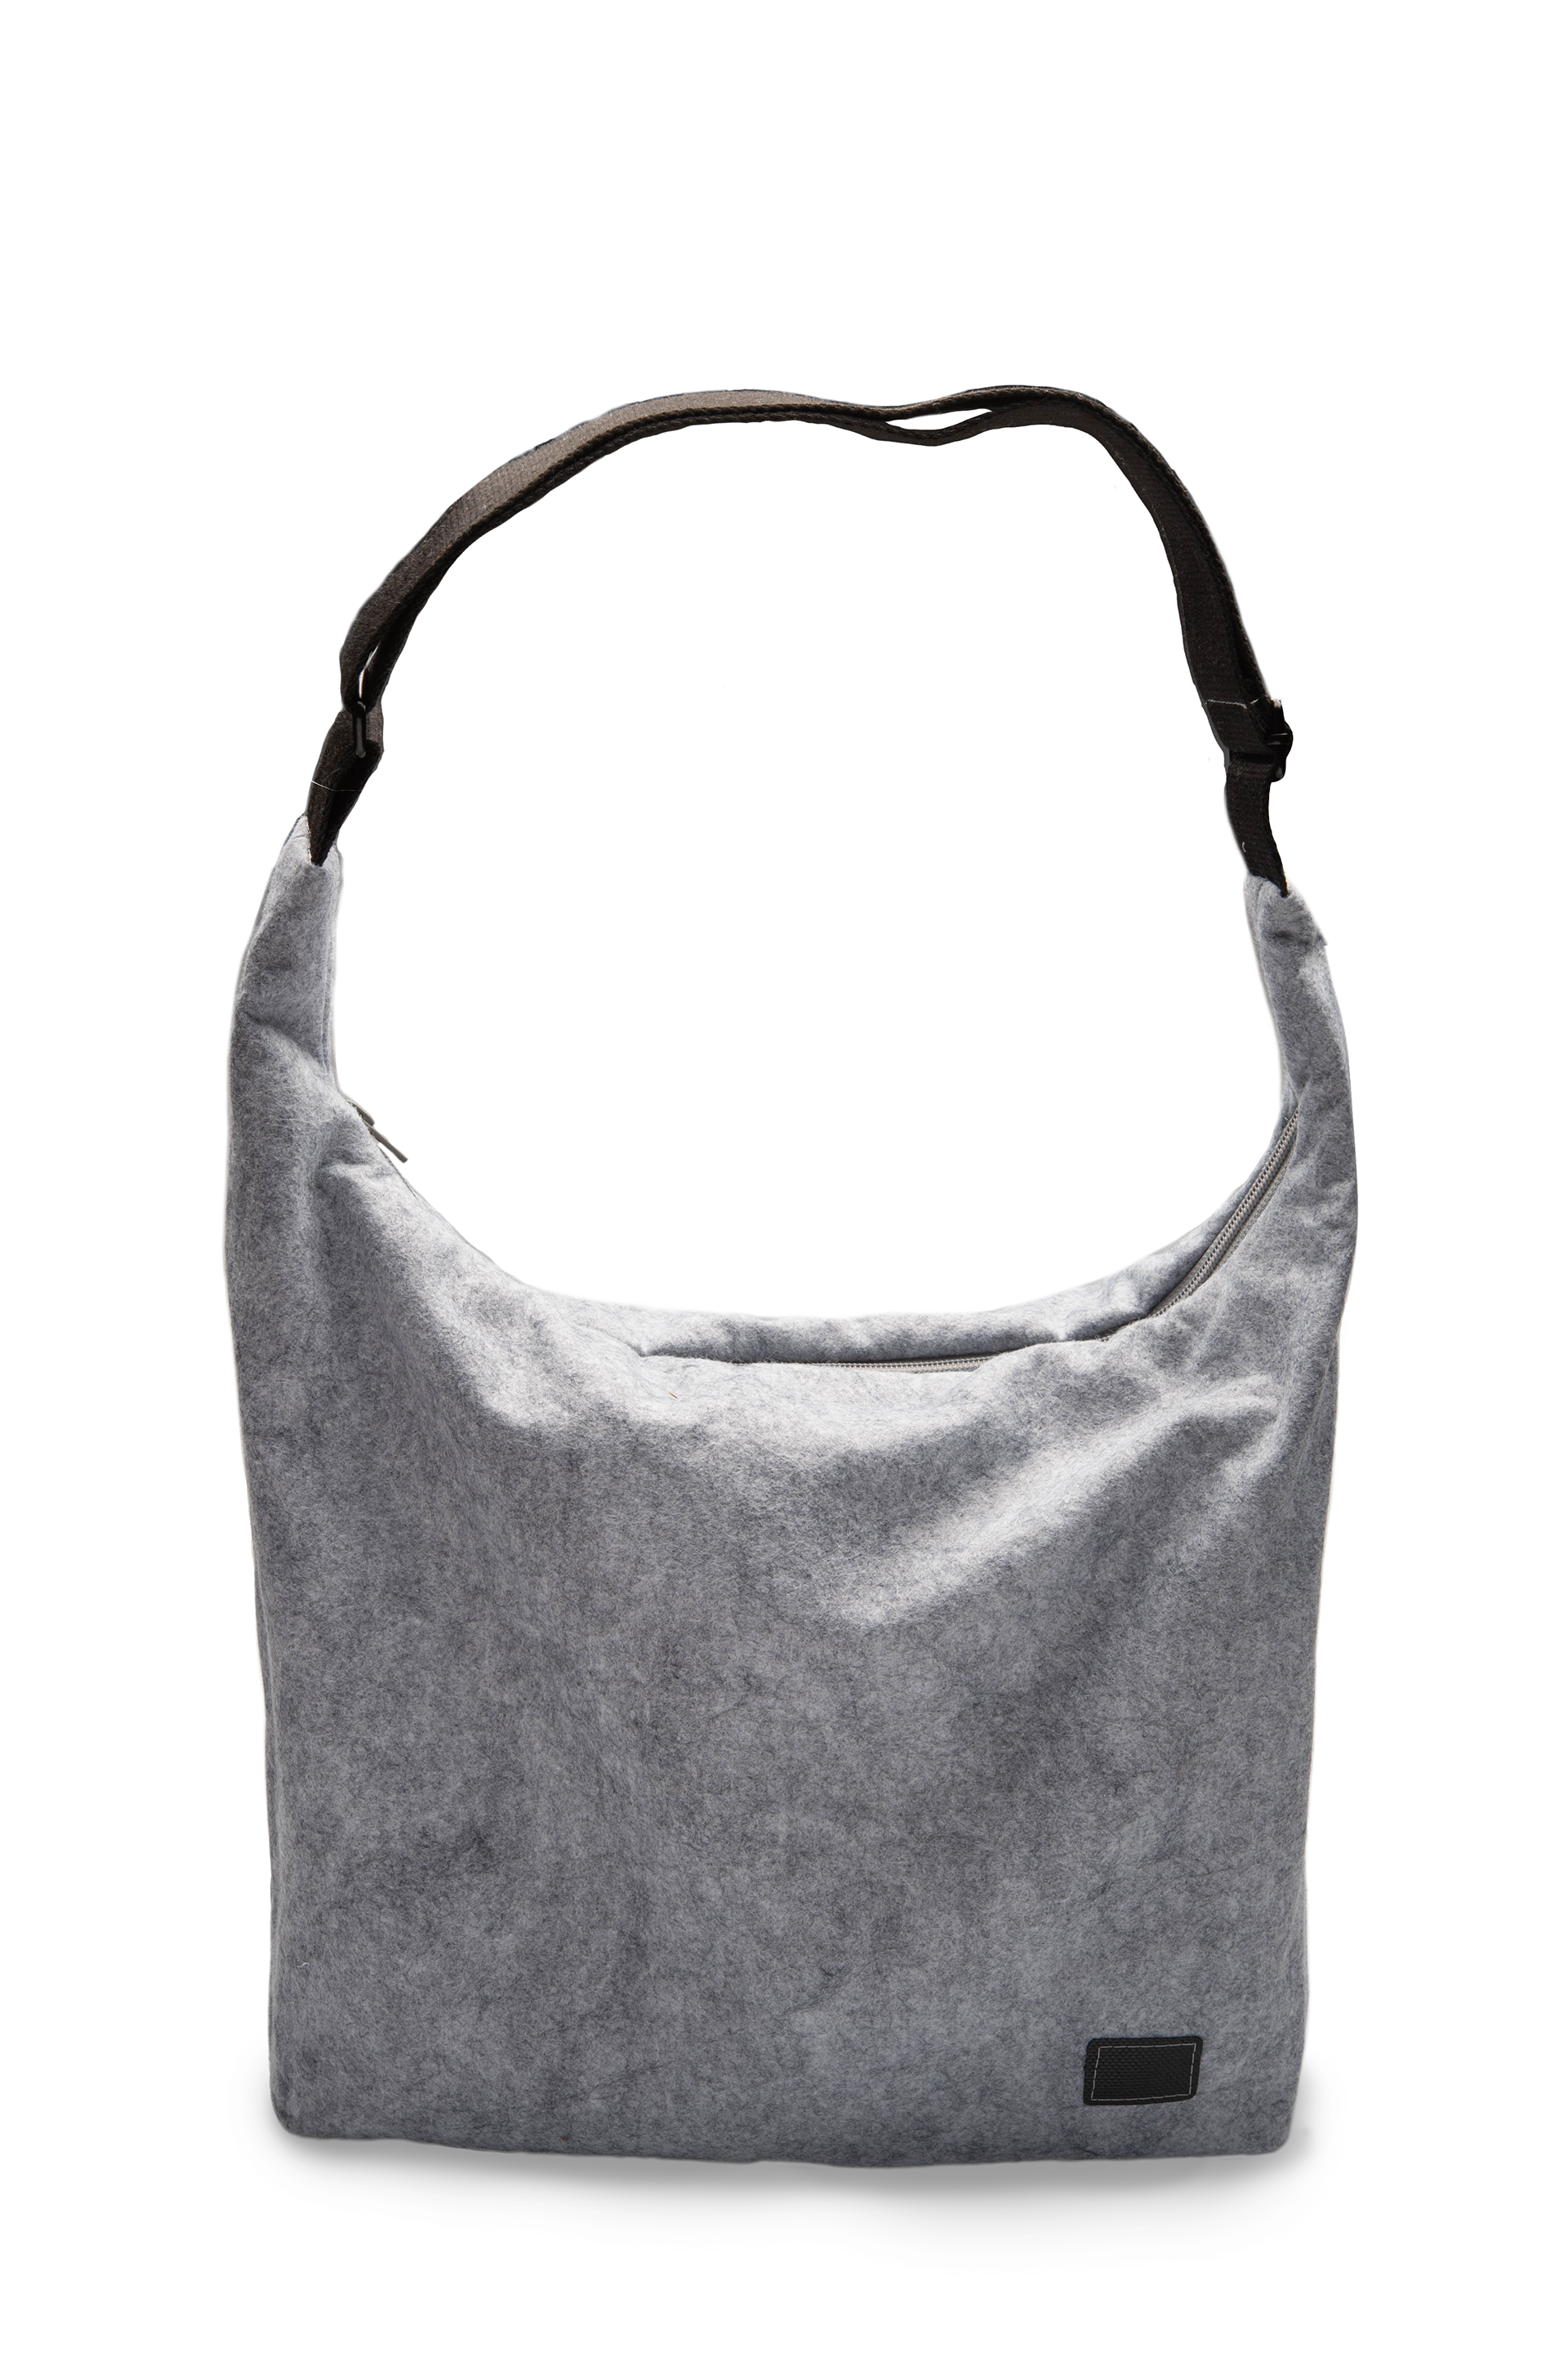 Mizuka Bazooka - Minimalist Messenger Bag Design